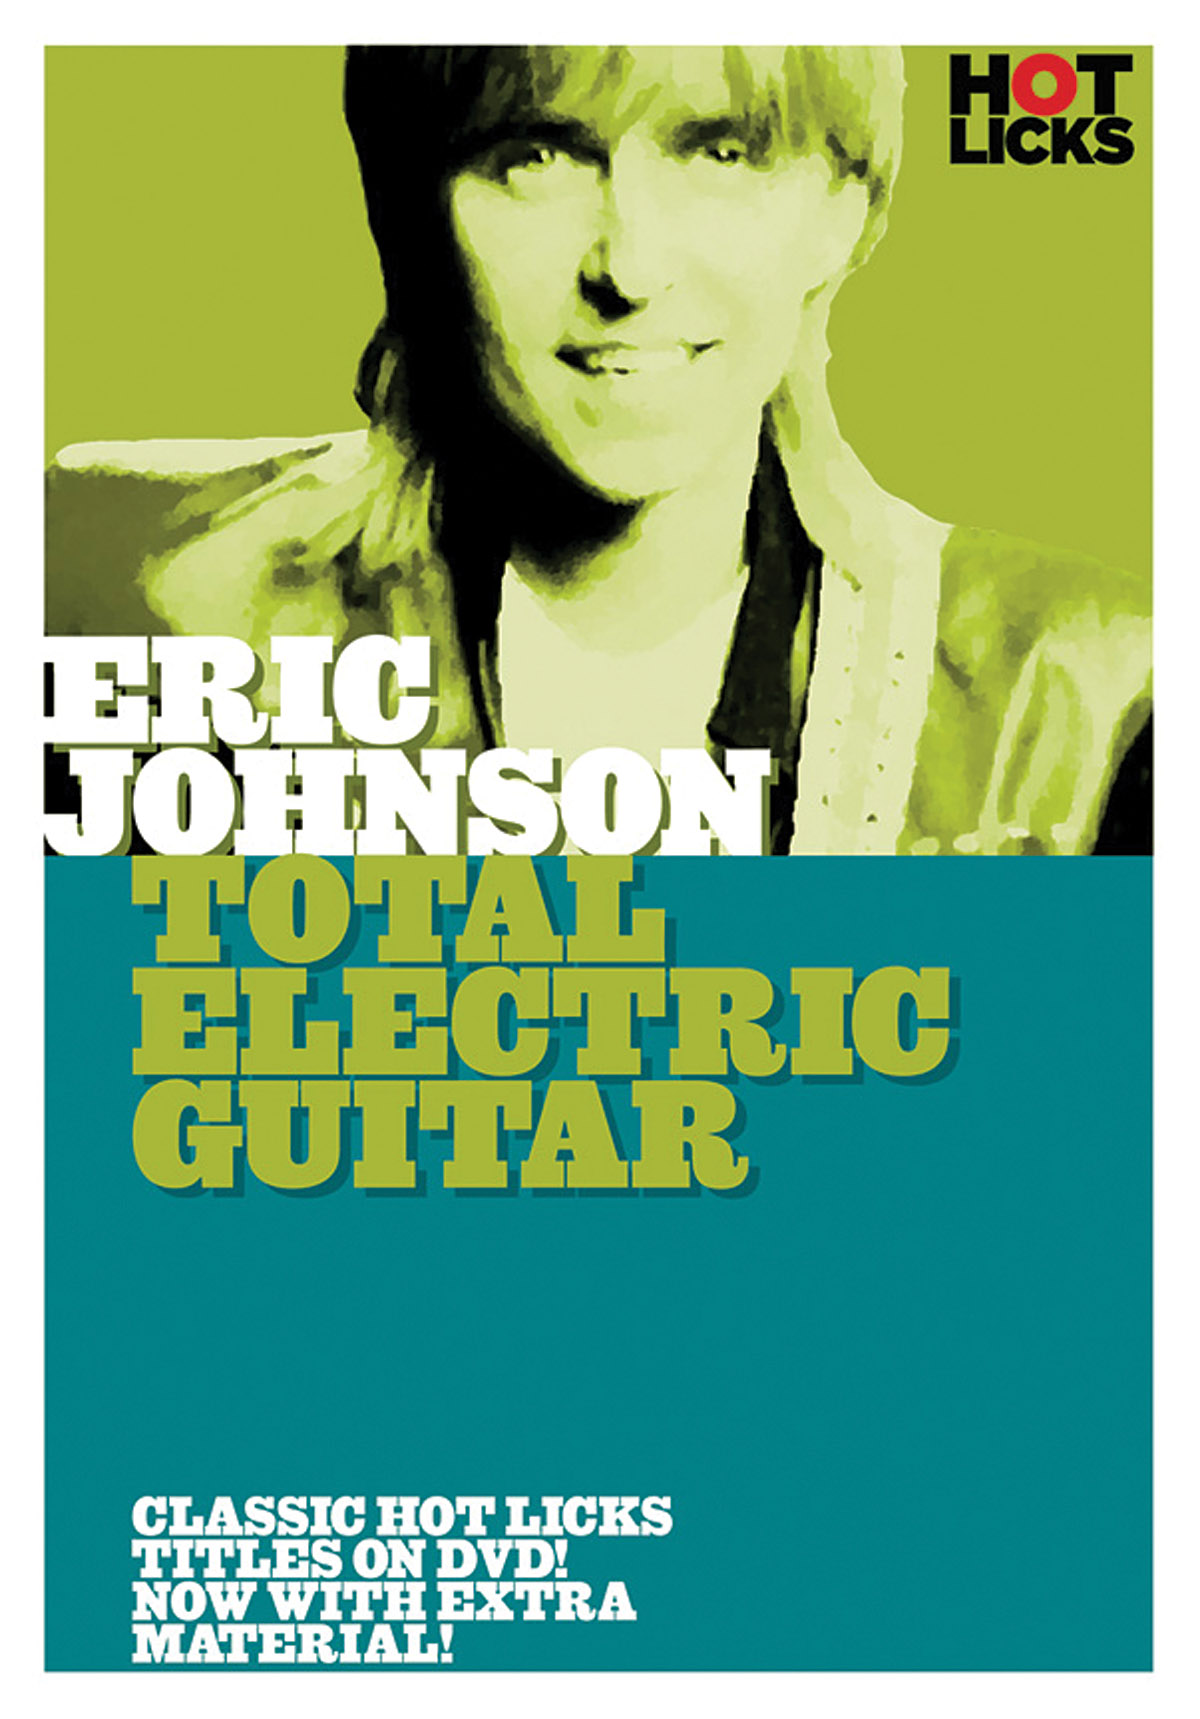 Eric Johnson: Eric Johnson - Total Electric Guitar: Guitar: DVD